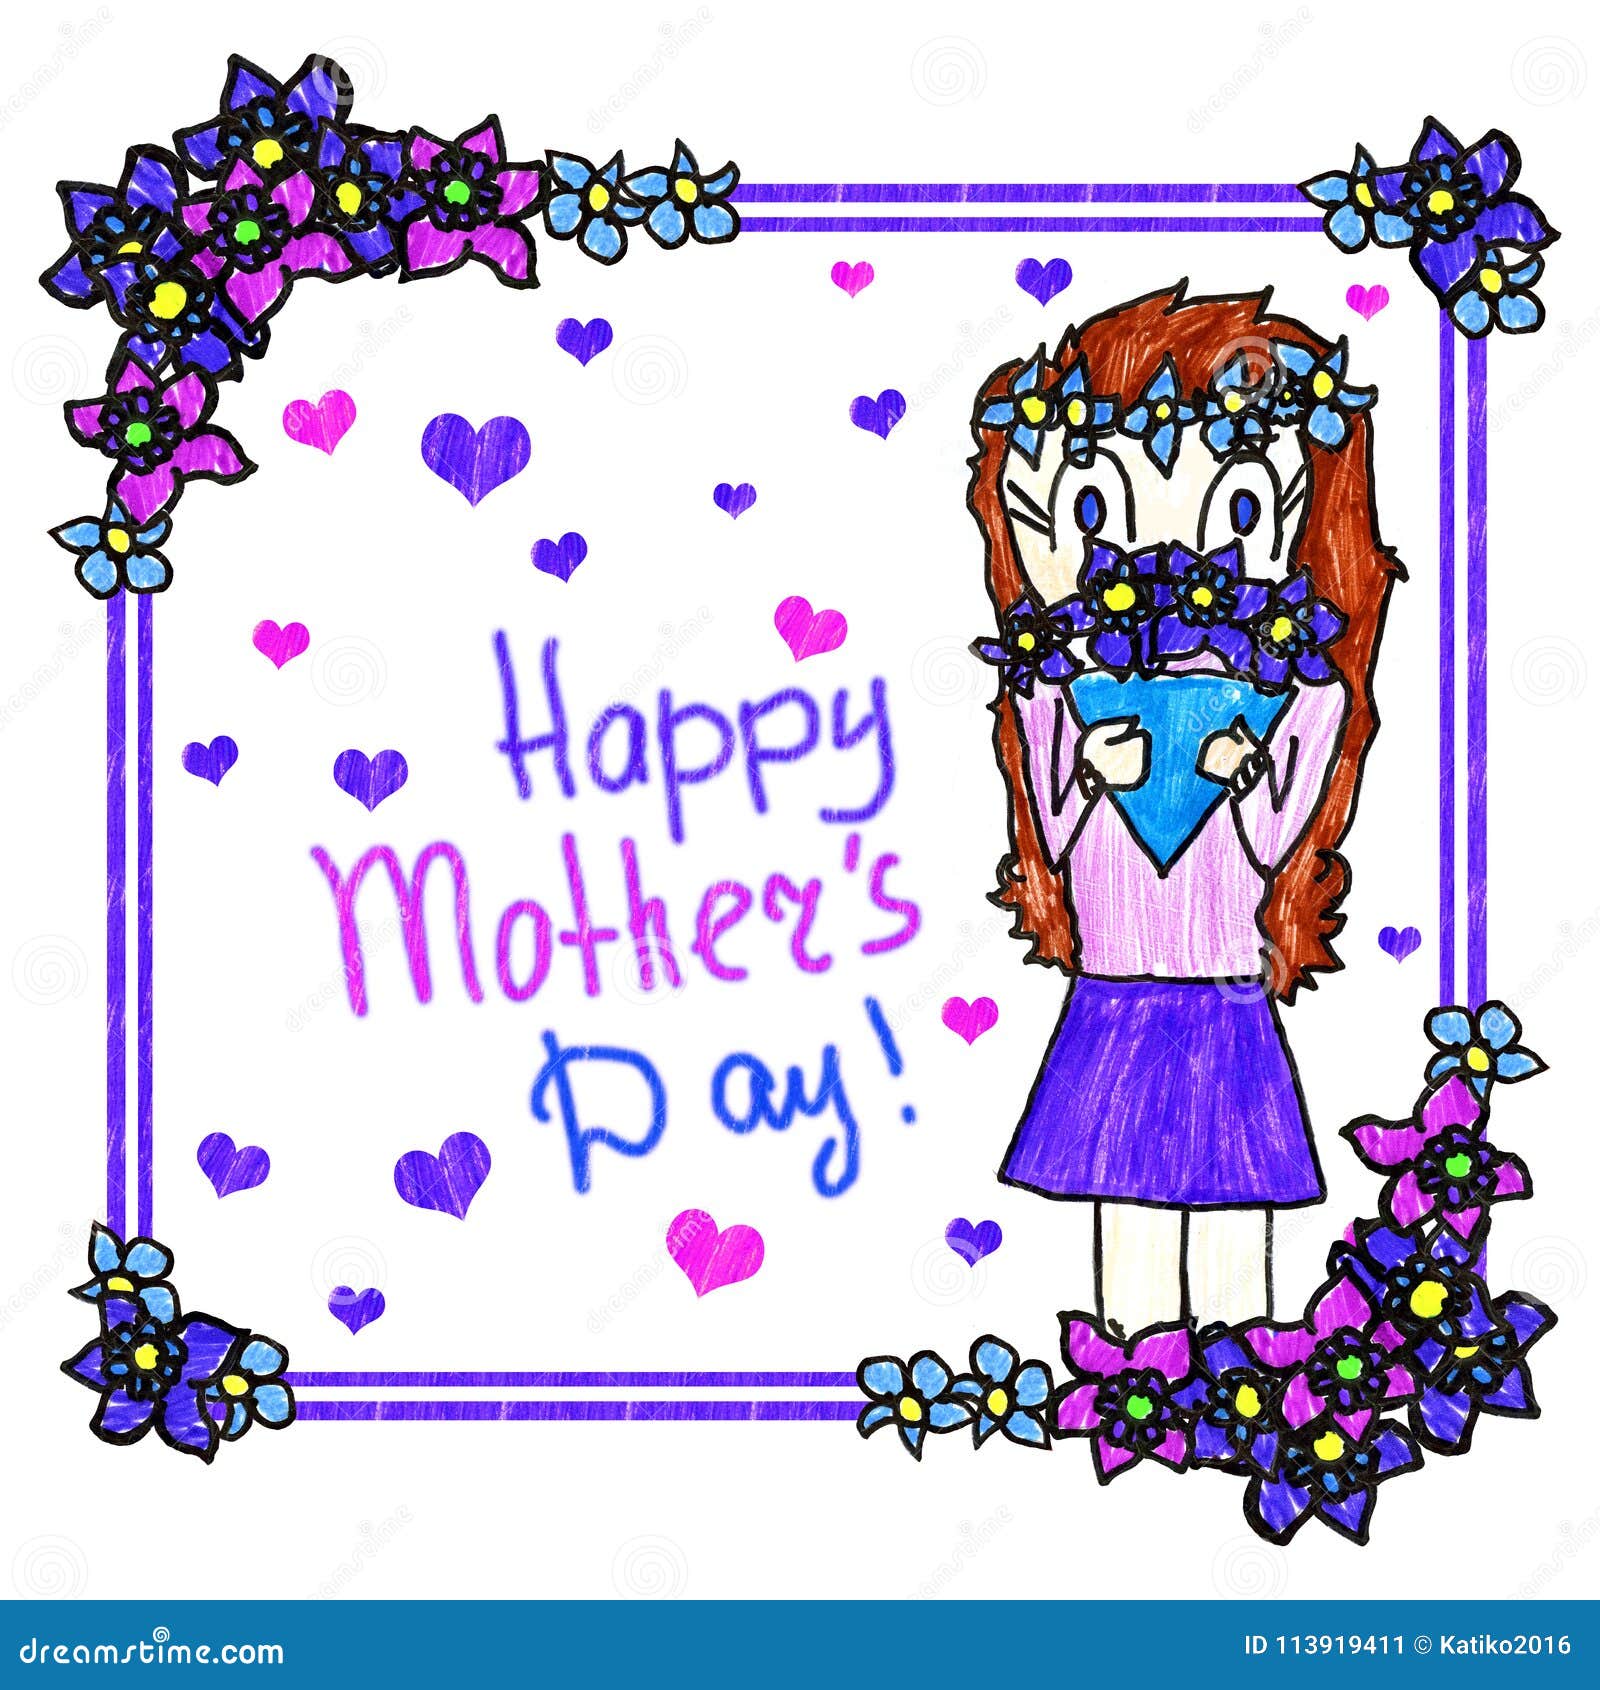 Flower Children Drawing For Mothers Day Illustration 31409034 - Megapixl